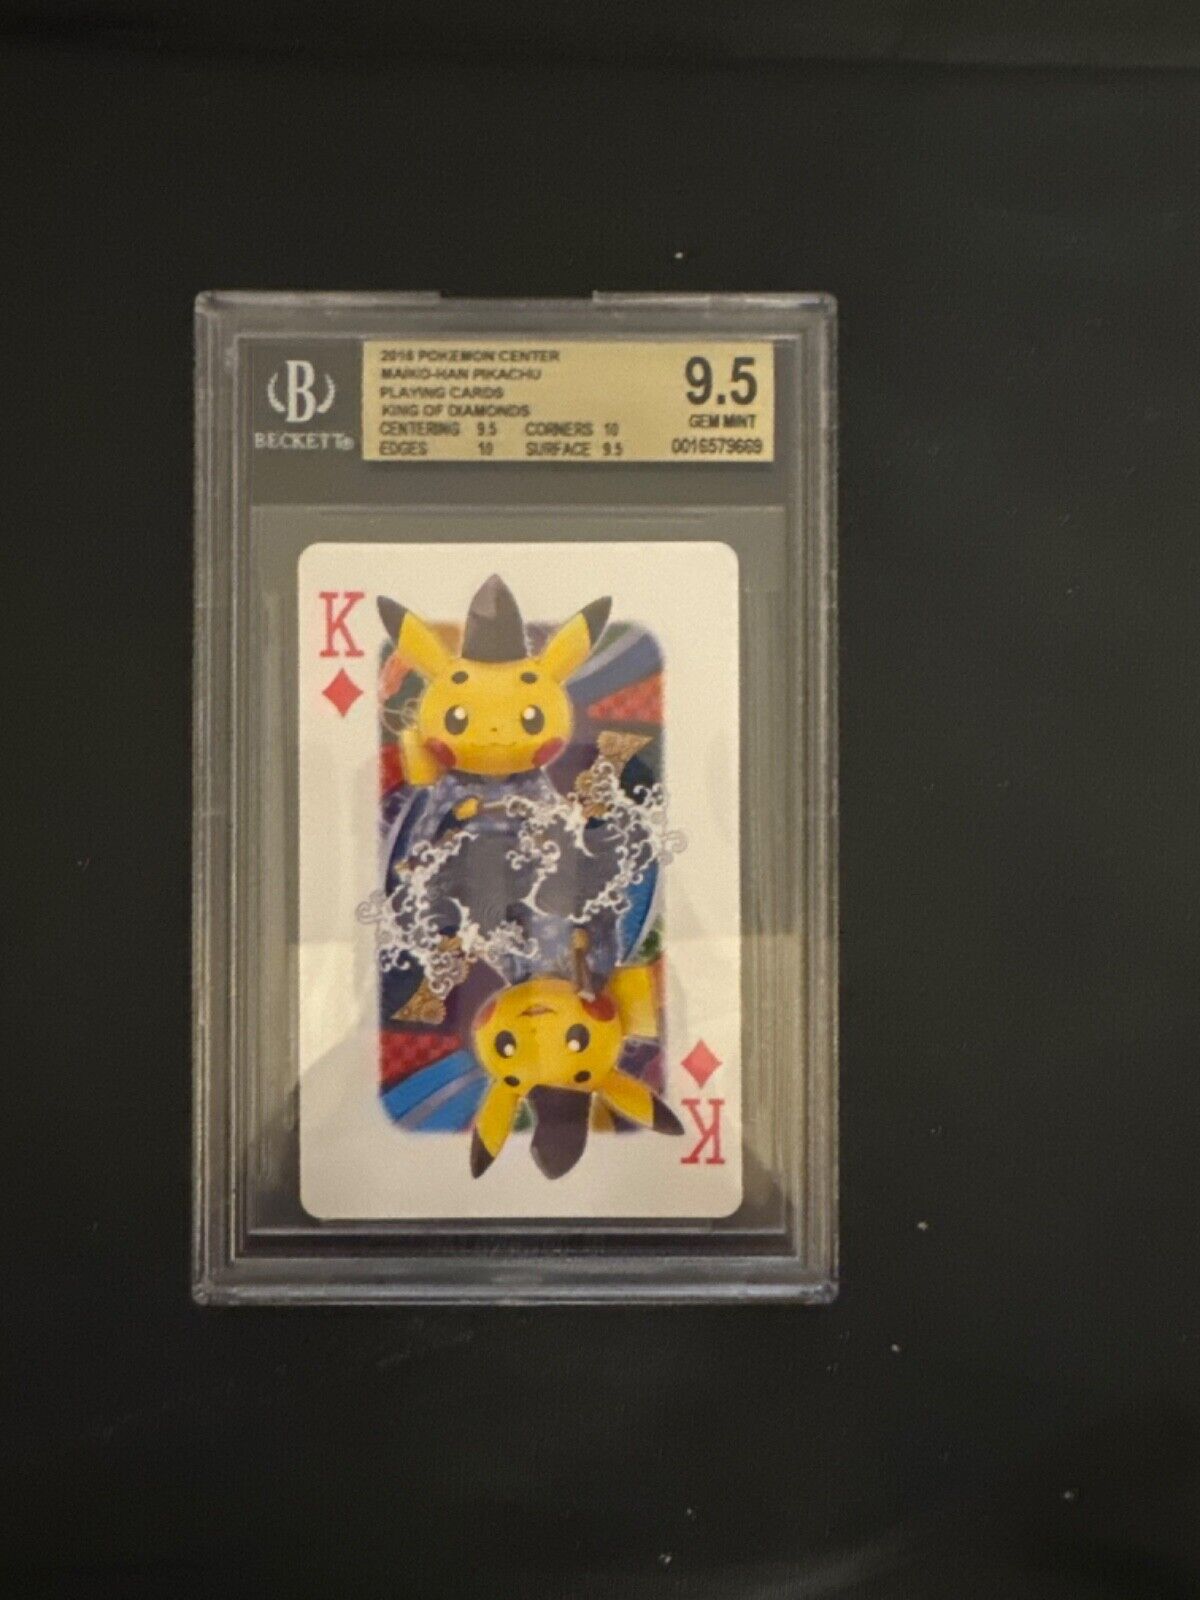 maiko-han pikachu king of diamonds playing cards Beckett 9.5